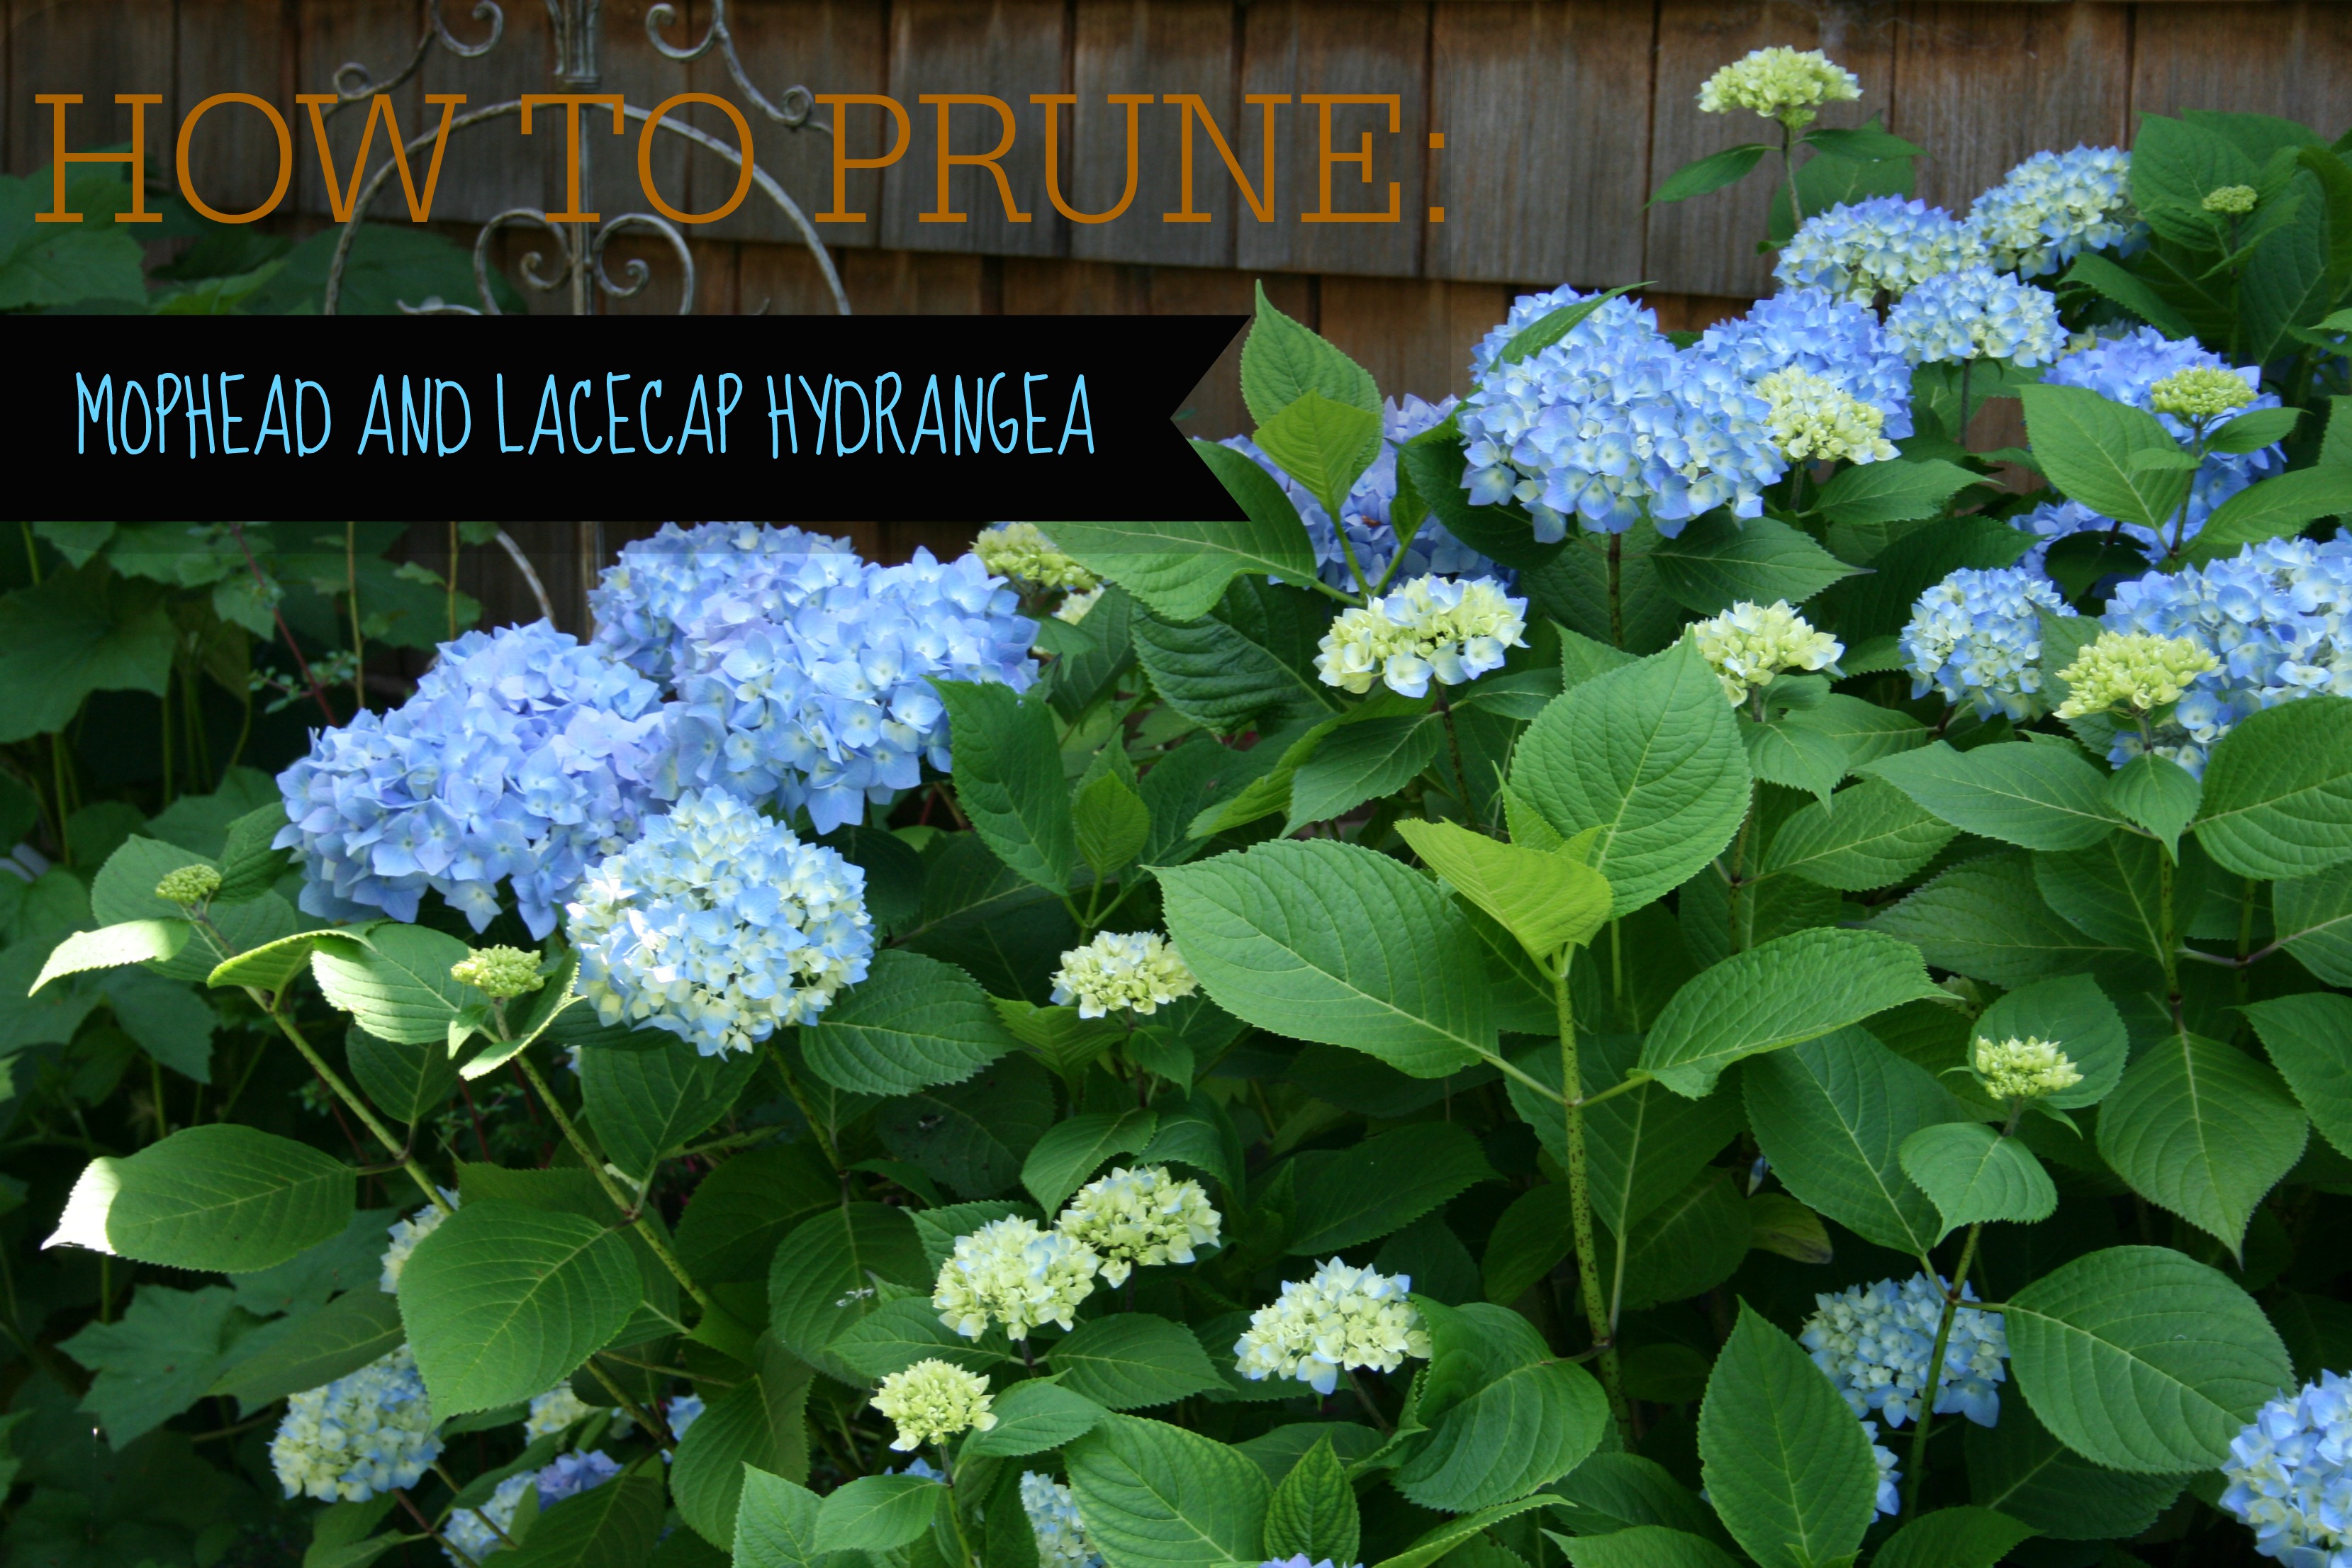 How to Prune Hydrangeas (Video Tutorial)